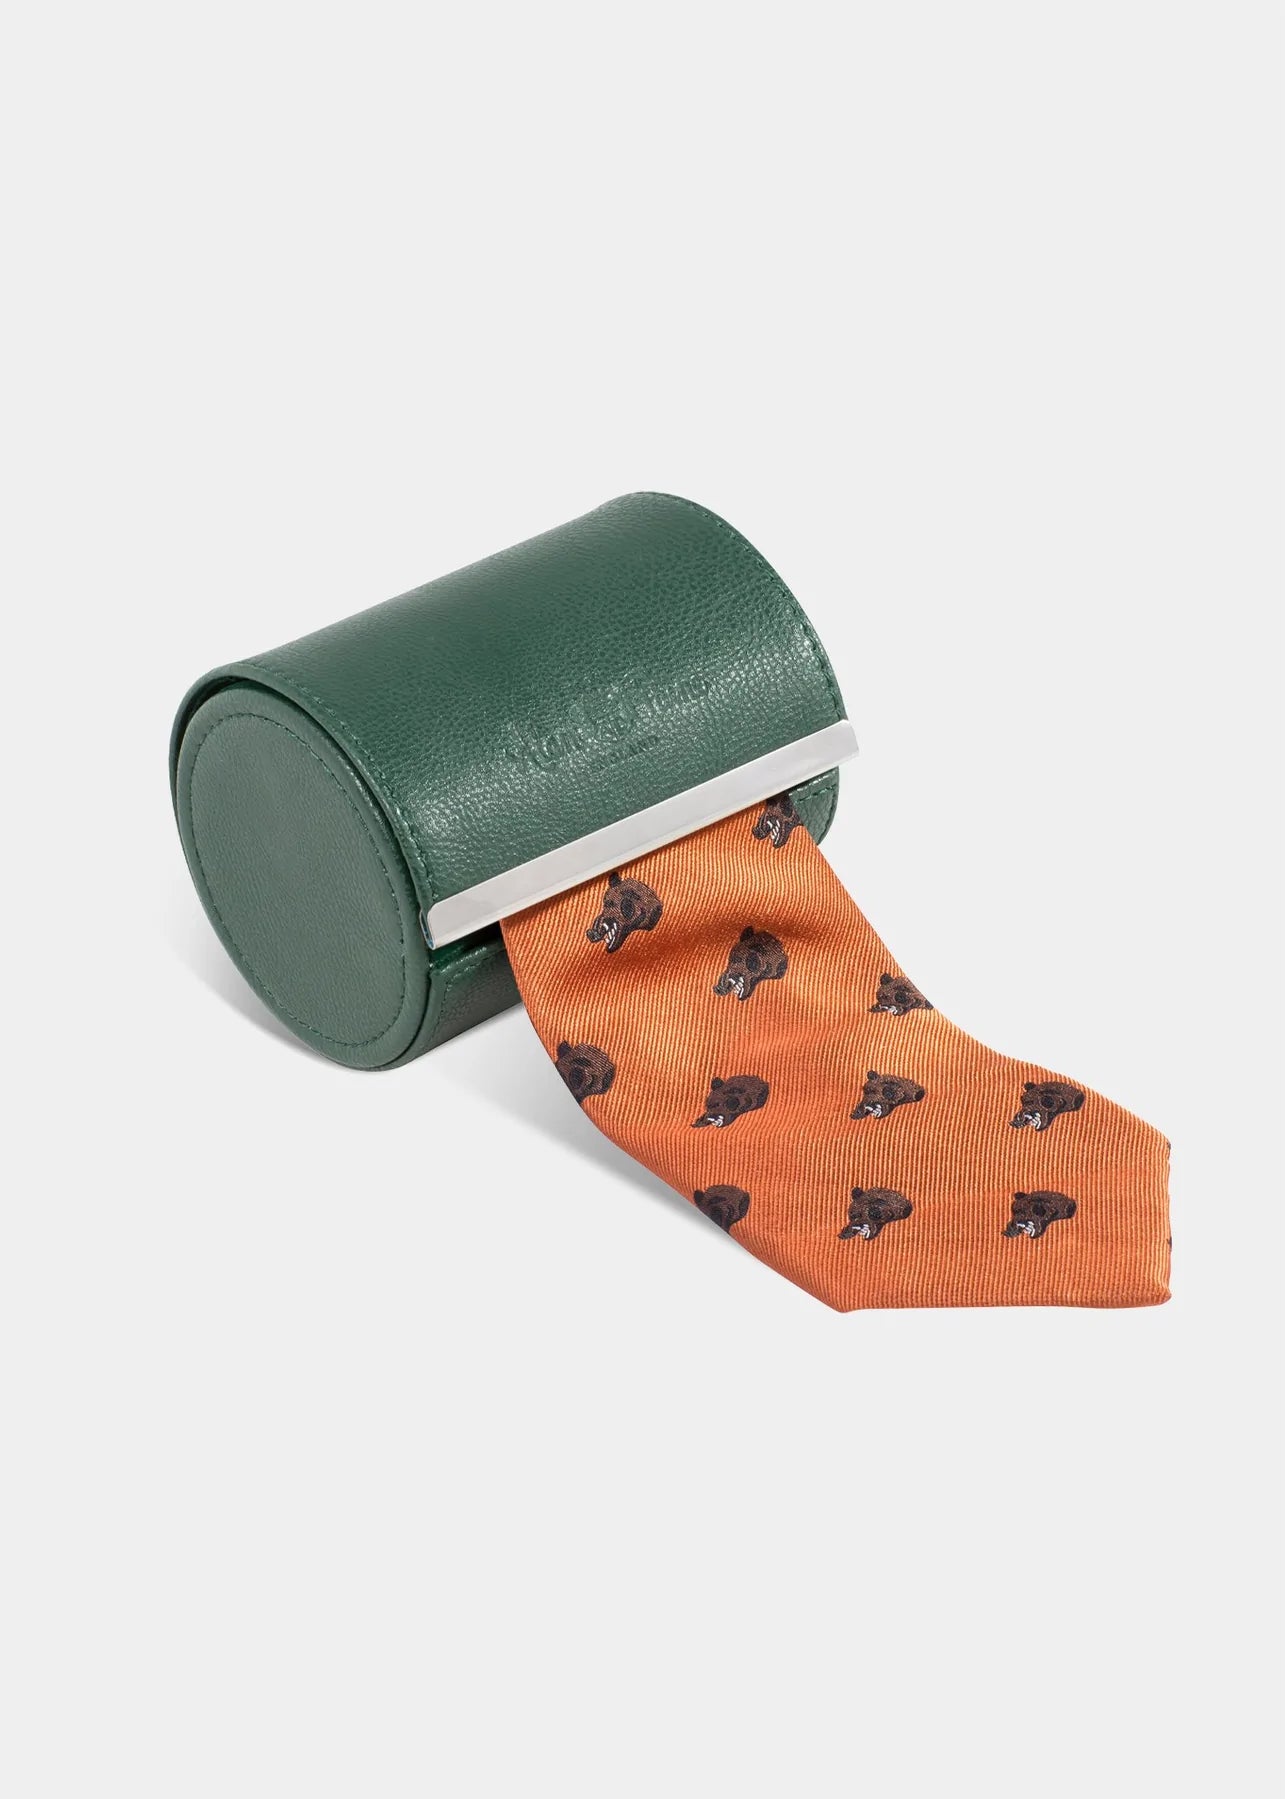 Ripon Silk Country Tie for Men with Wild Boar Design